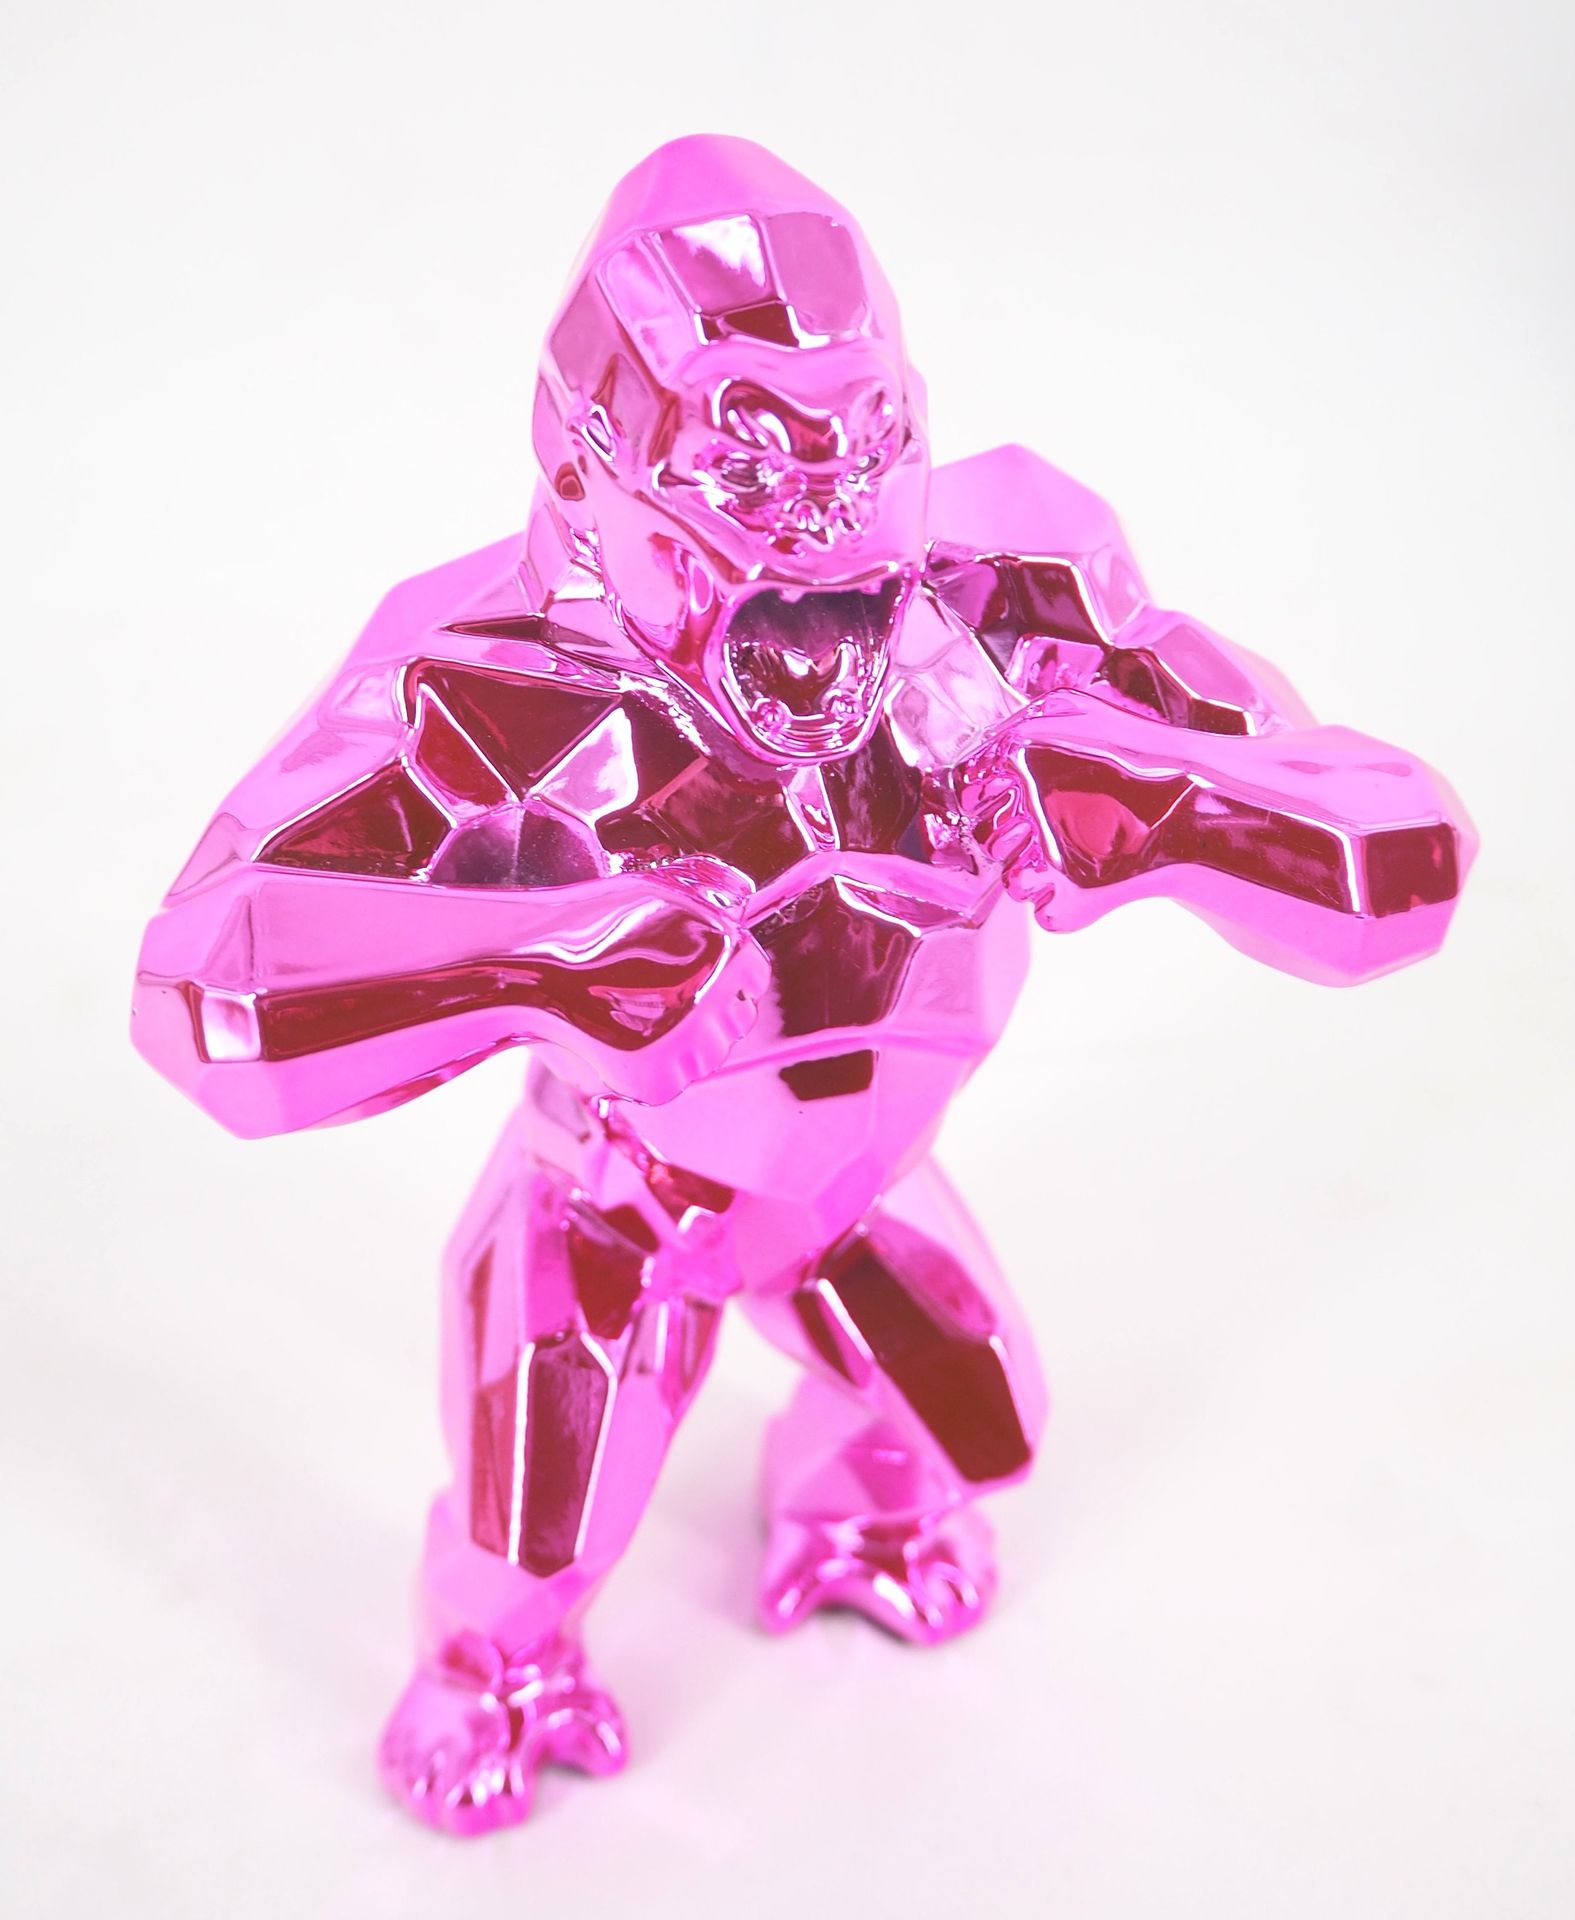 Richard Orlinski Richard ORLINSKI

Kong spirit (pink edition)

Sculpture origina&hellip;